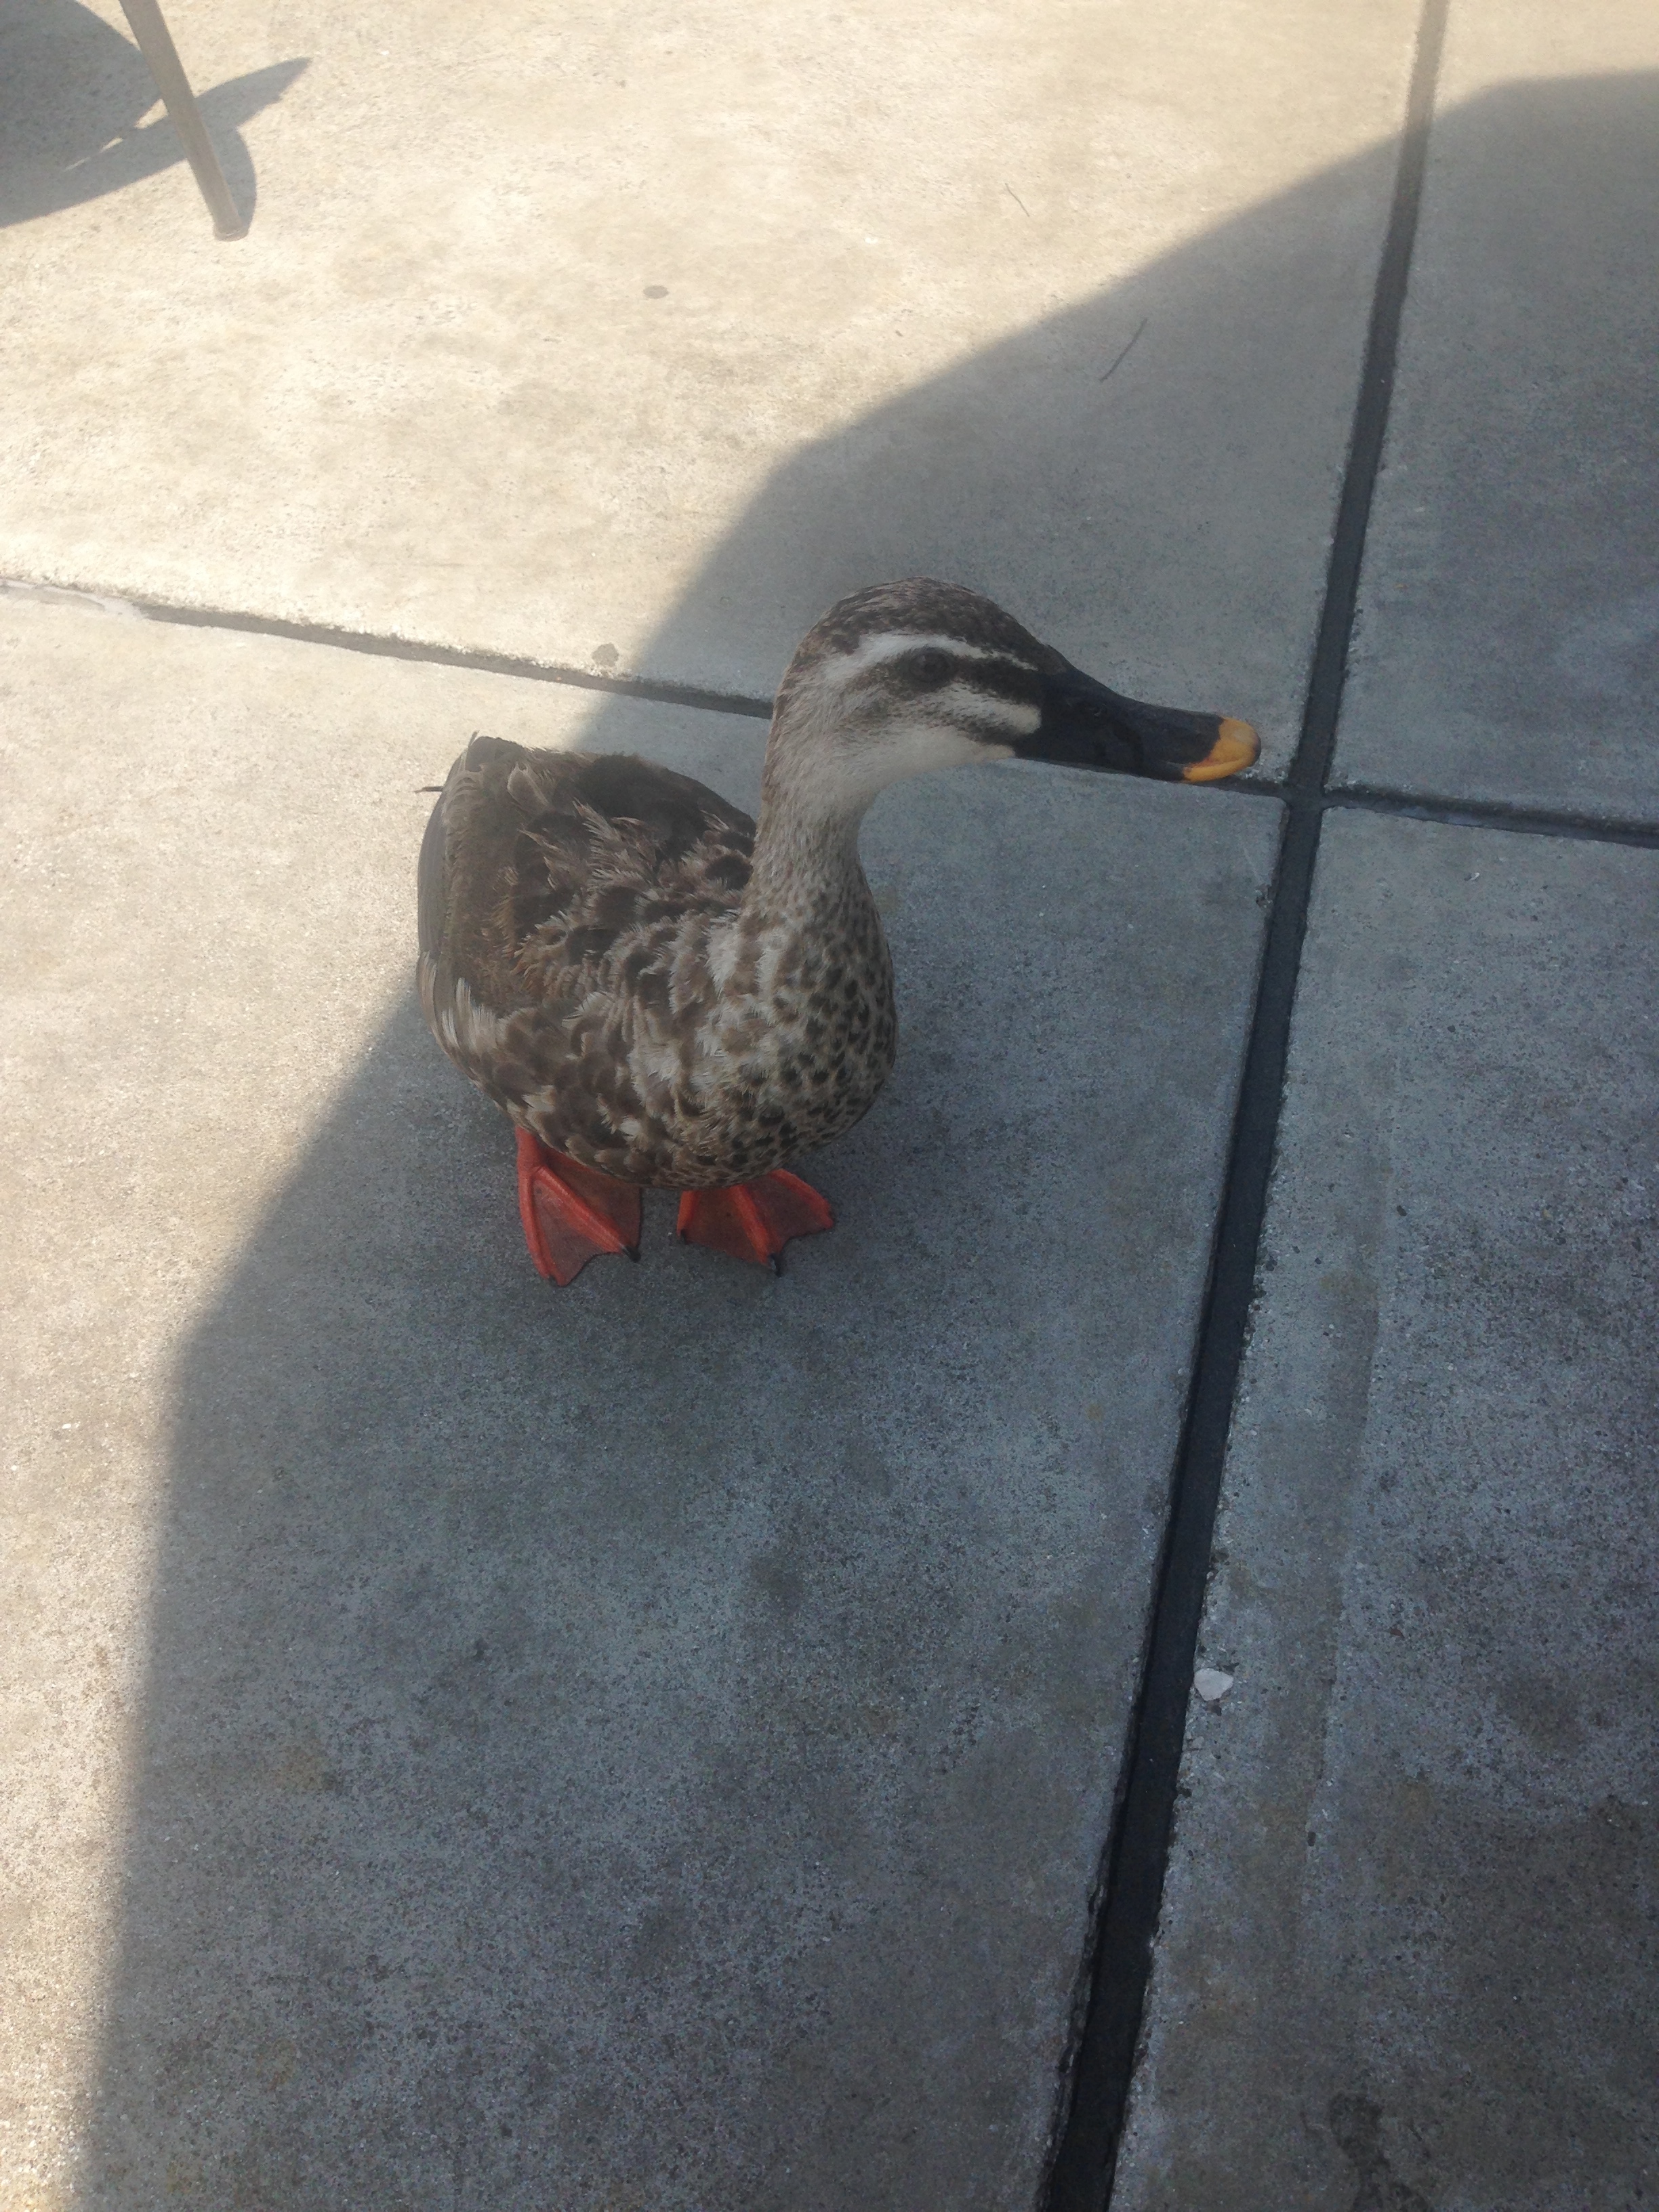 a duck standing on a sidewalk